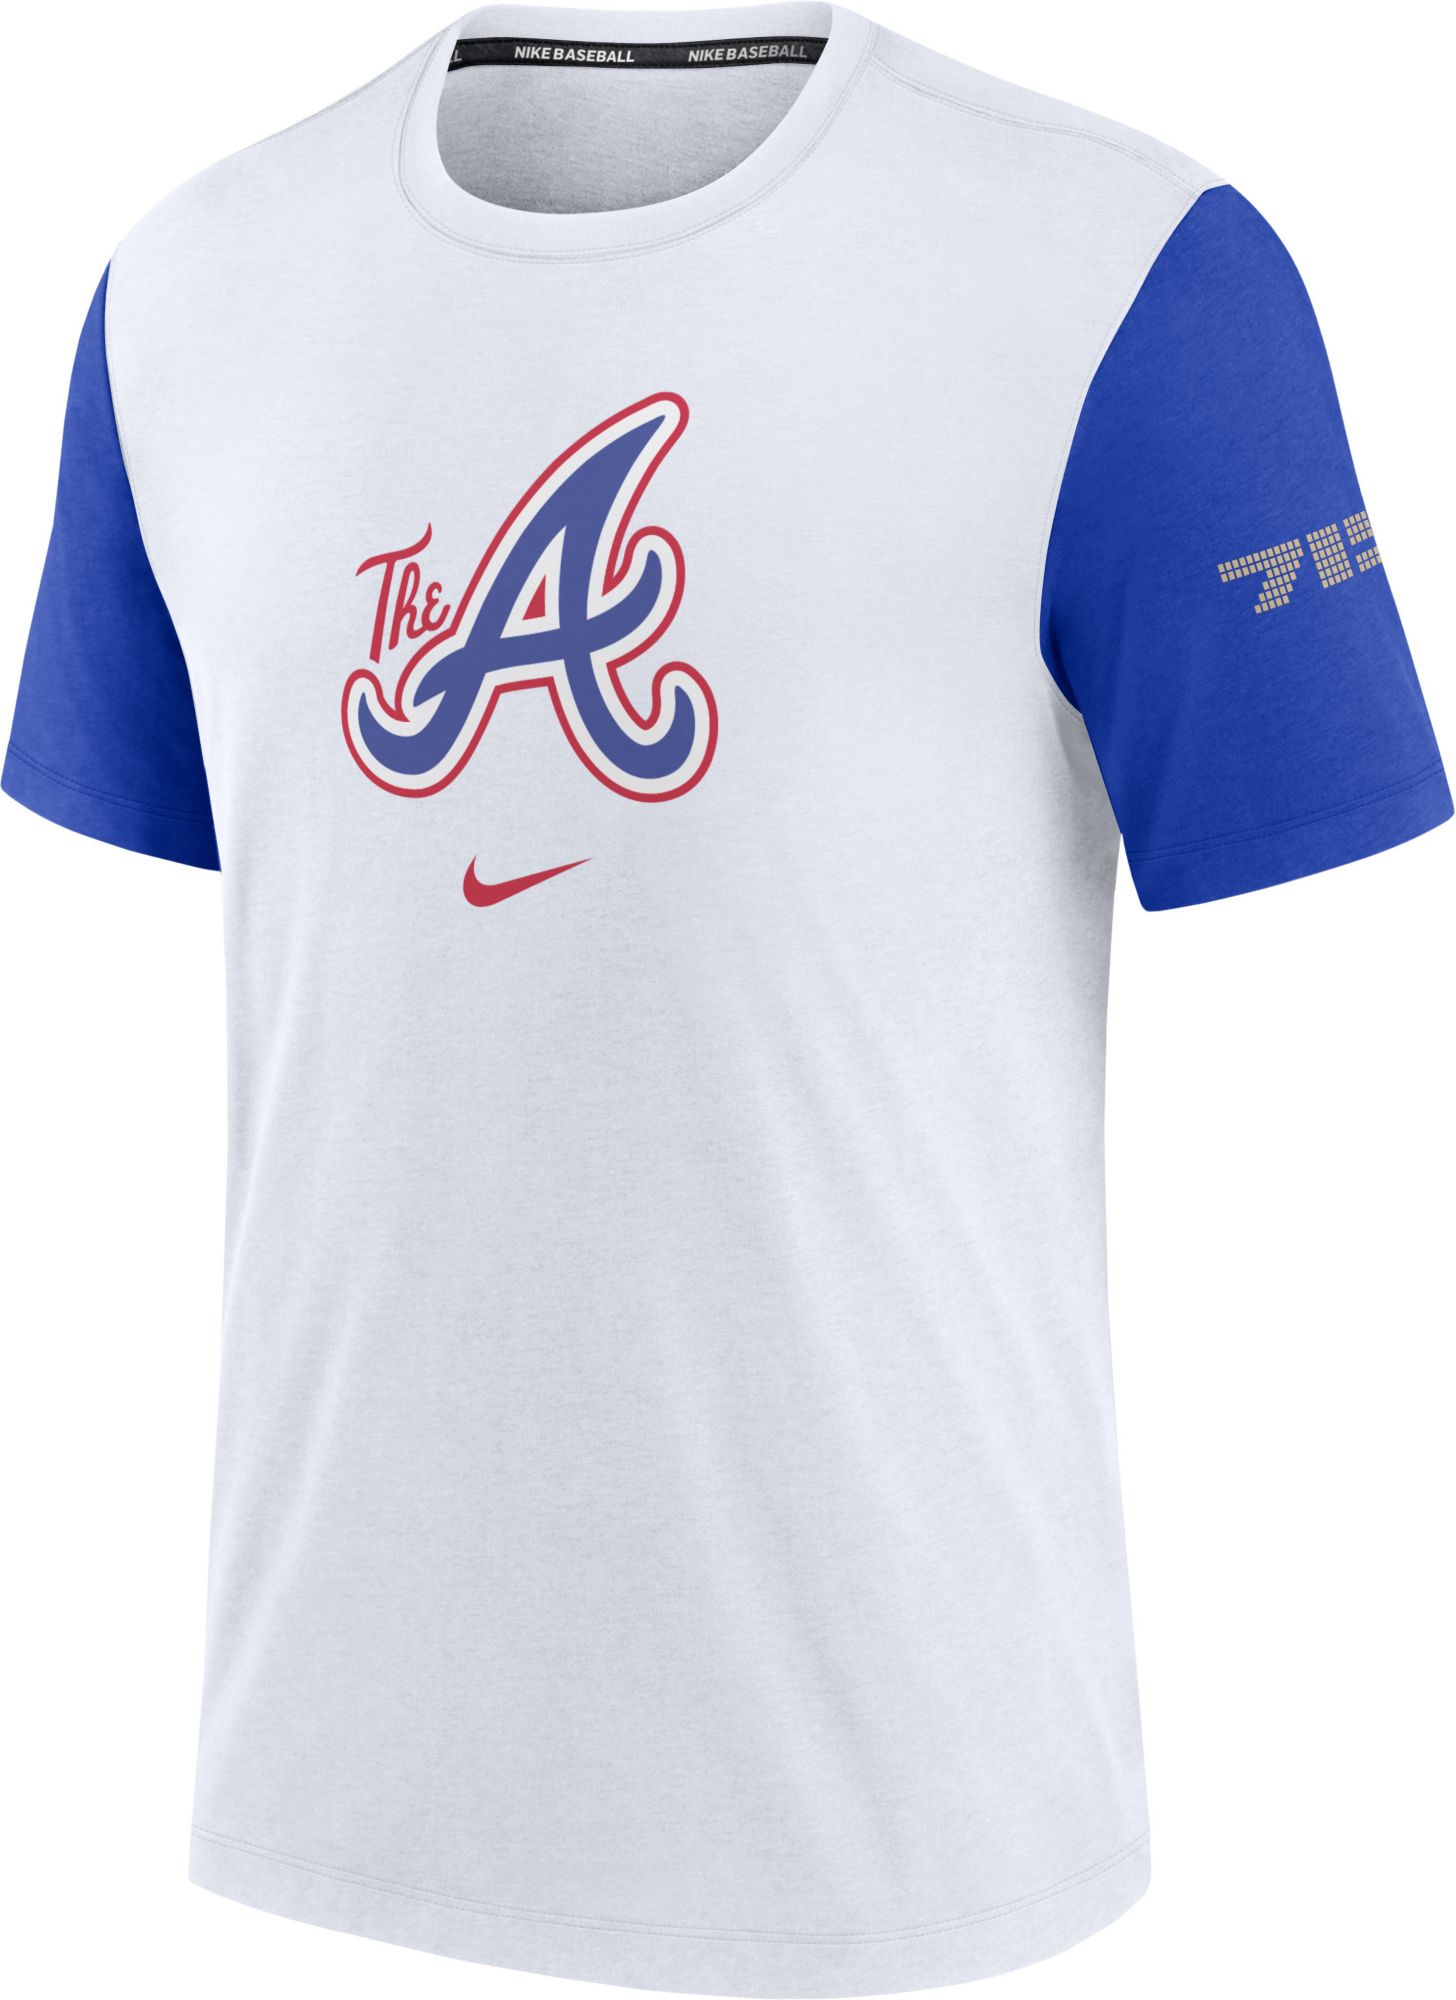 Atlanta Braves Hank Aaron 44 Mlb White And Blue Hawaiian Shirt - Tagotee